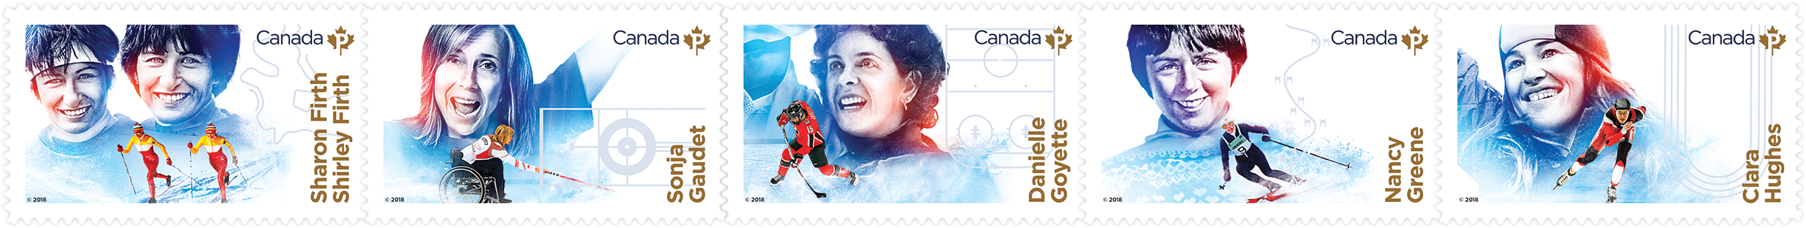 Canada Post stamps featuring athletes: Sharon and Shirley Firth, Sonja Gaudet, Danielle Goyette, Nancy Greene, Clara Hughes.